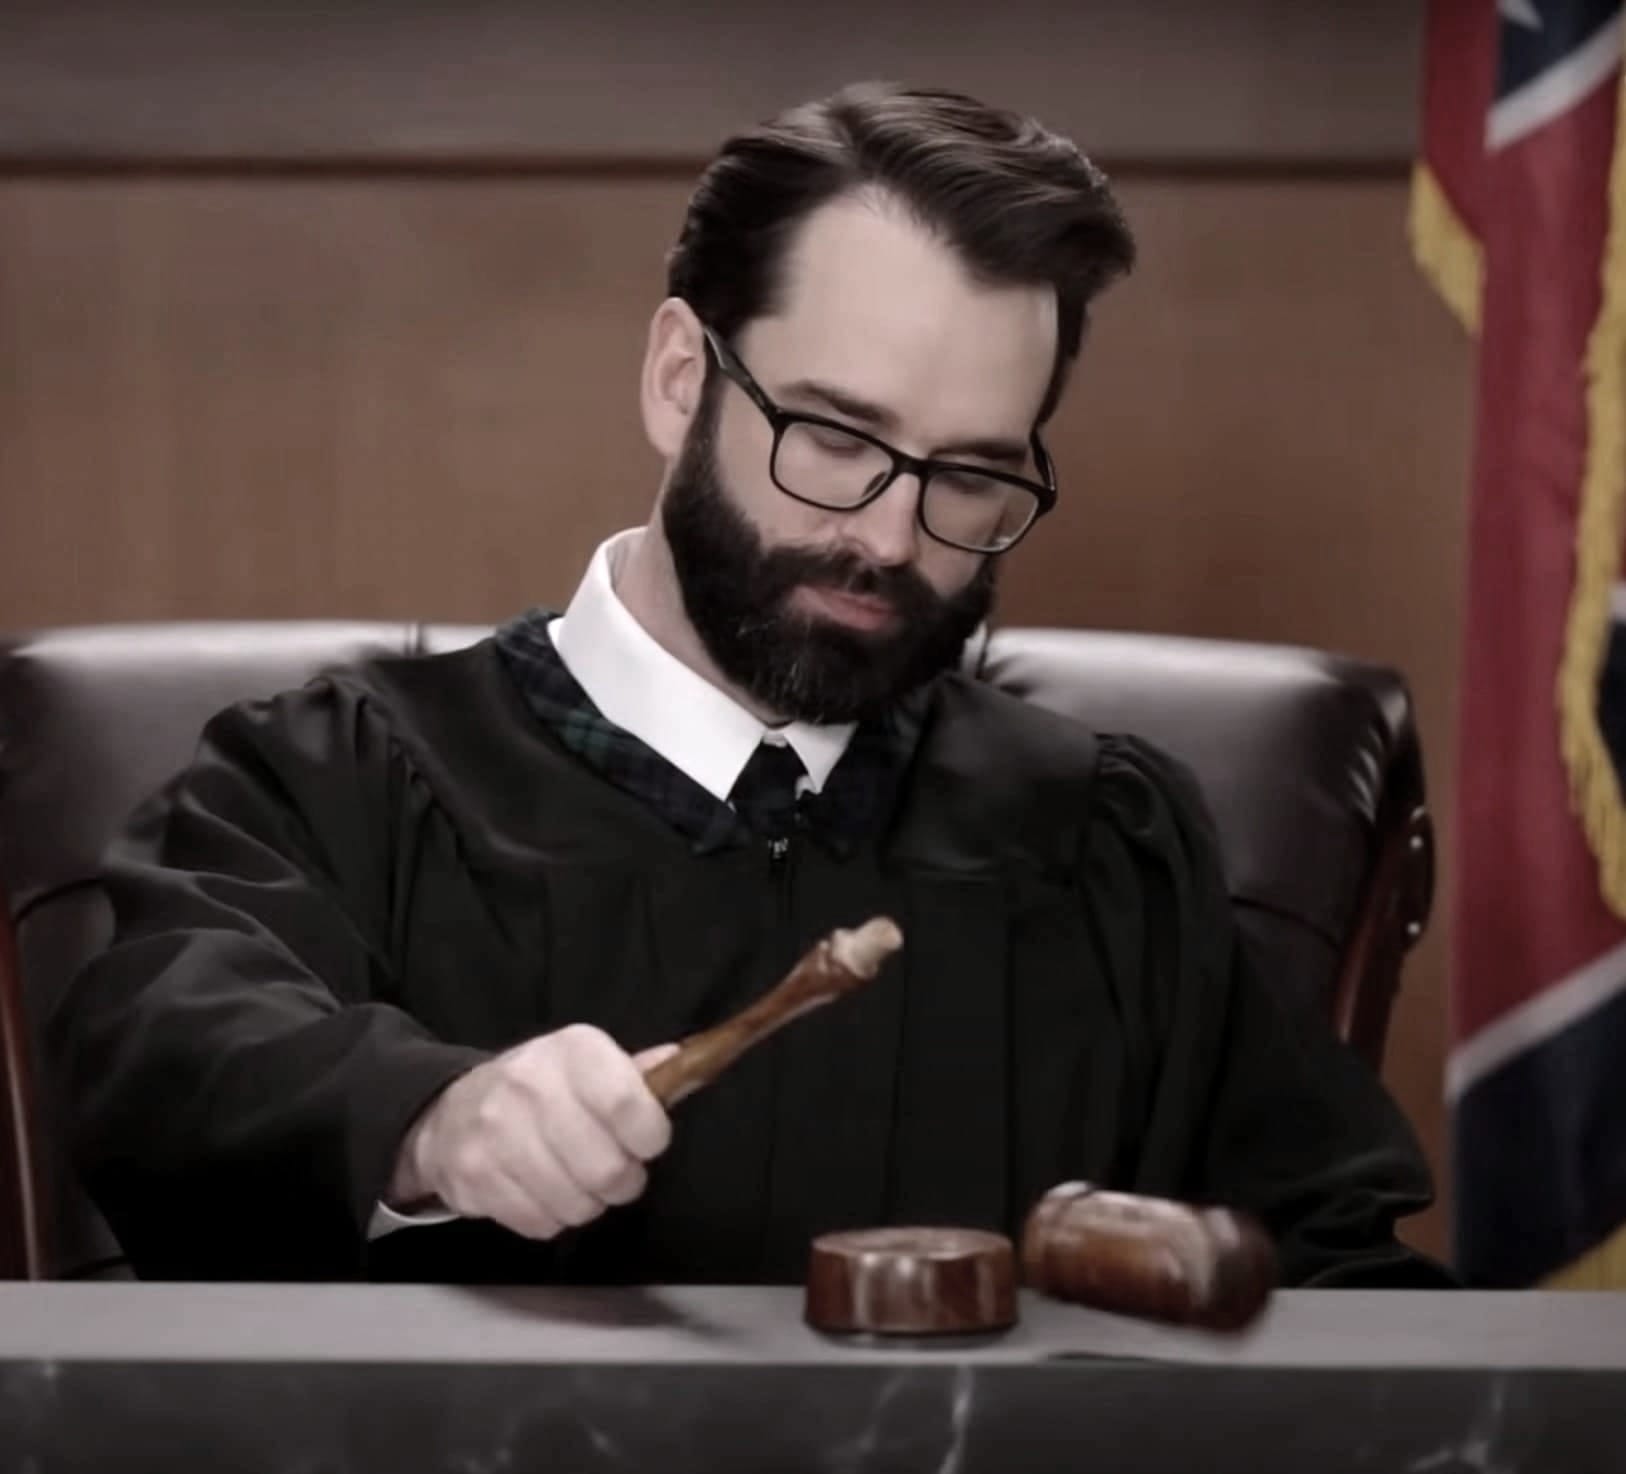 Matt Walsh to Star in 'Judge Judy'-style Comedy Show 'Judged by Matt Walsh'